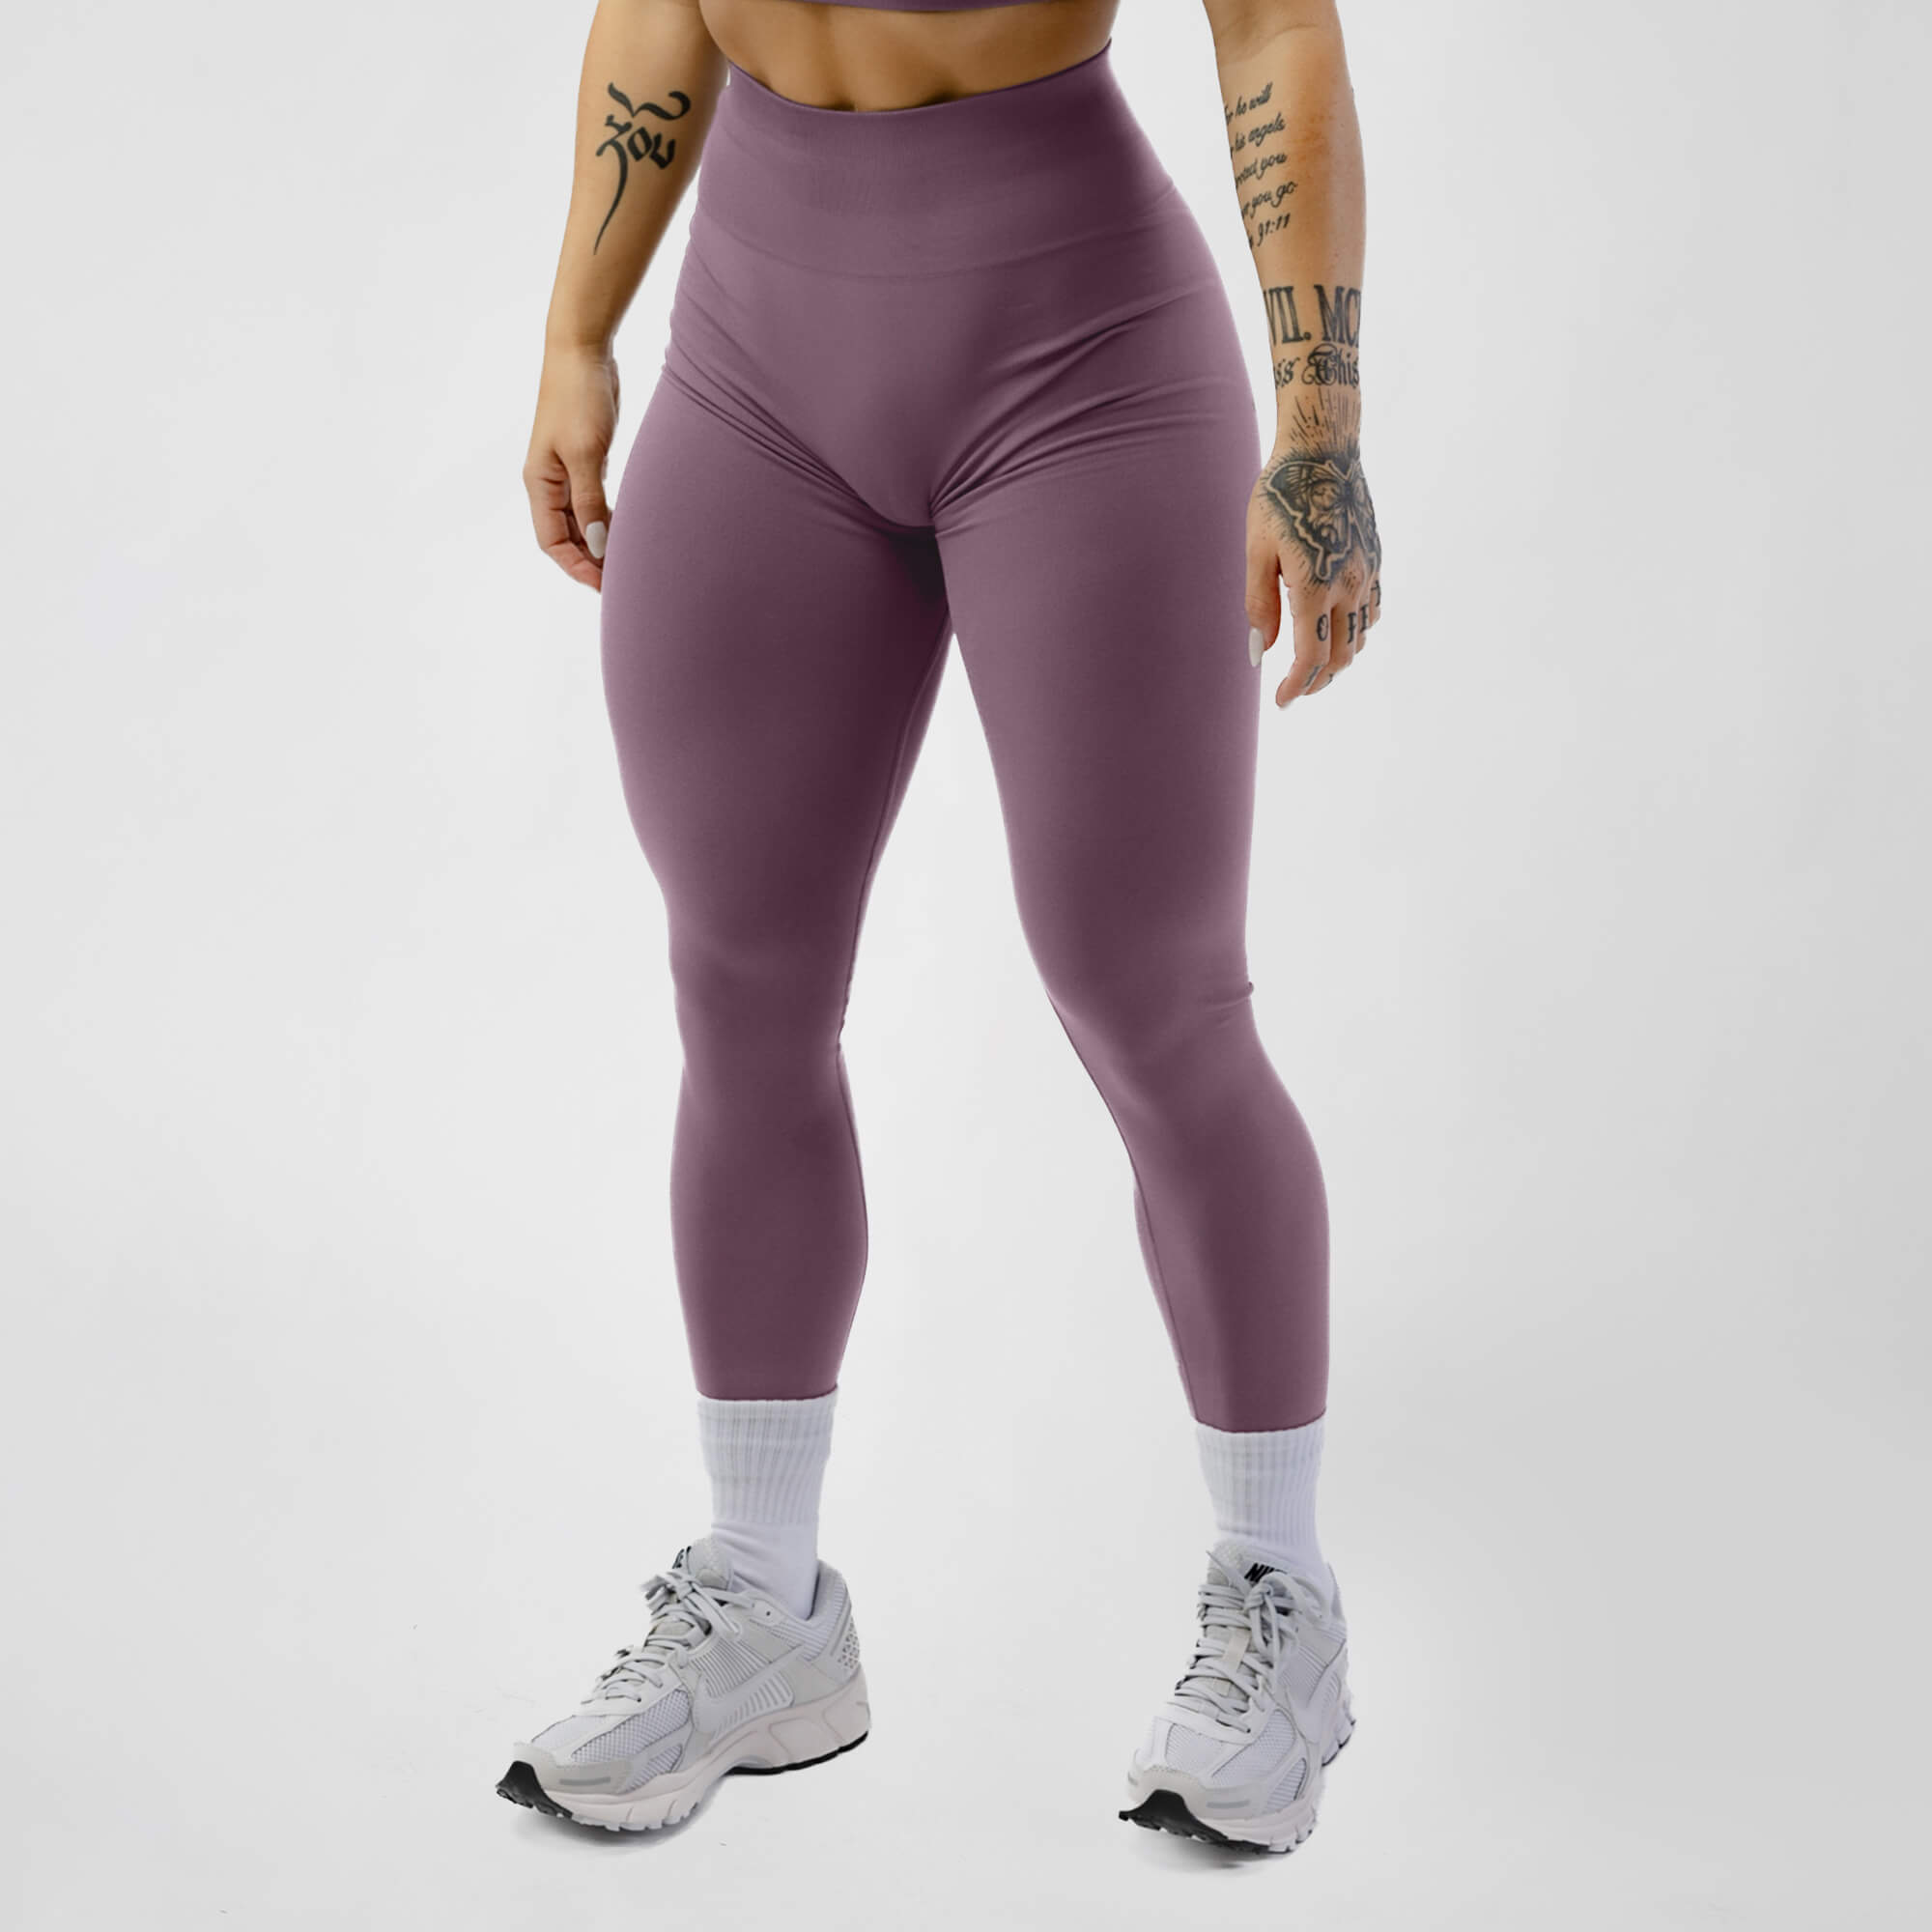 Generic Gymreapers Women Seamless Leggings Women Sexy Fitness Gym